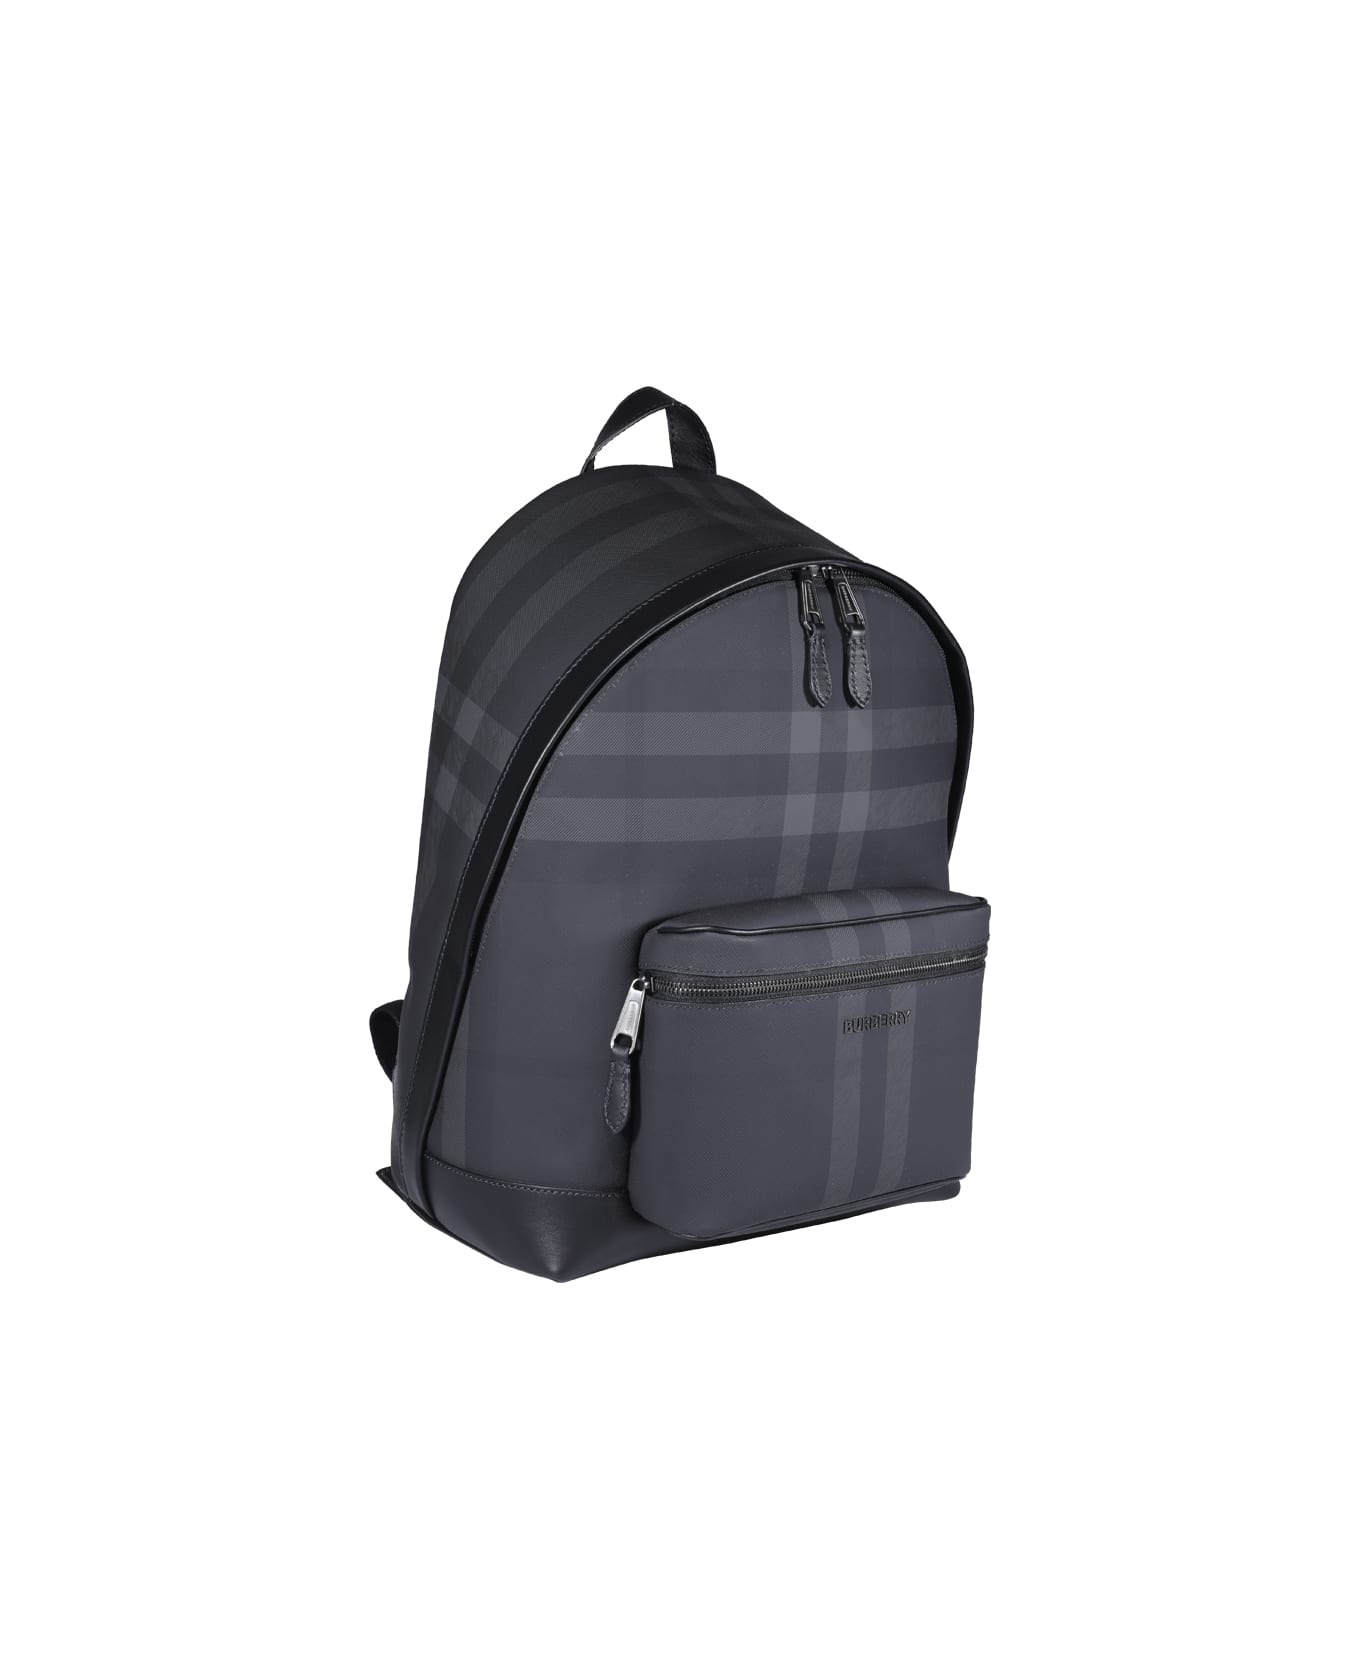 Burberry Tartan Motif Backpack - Grey